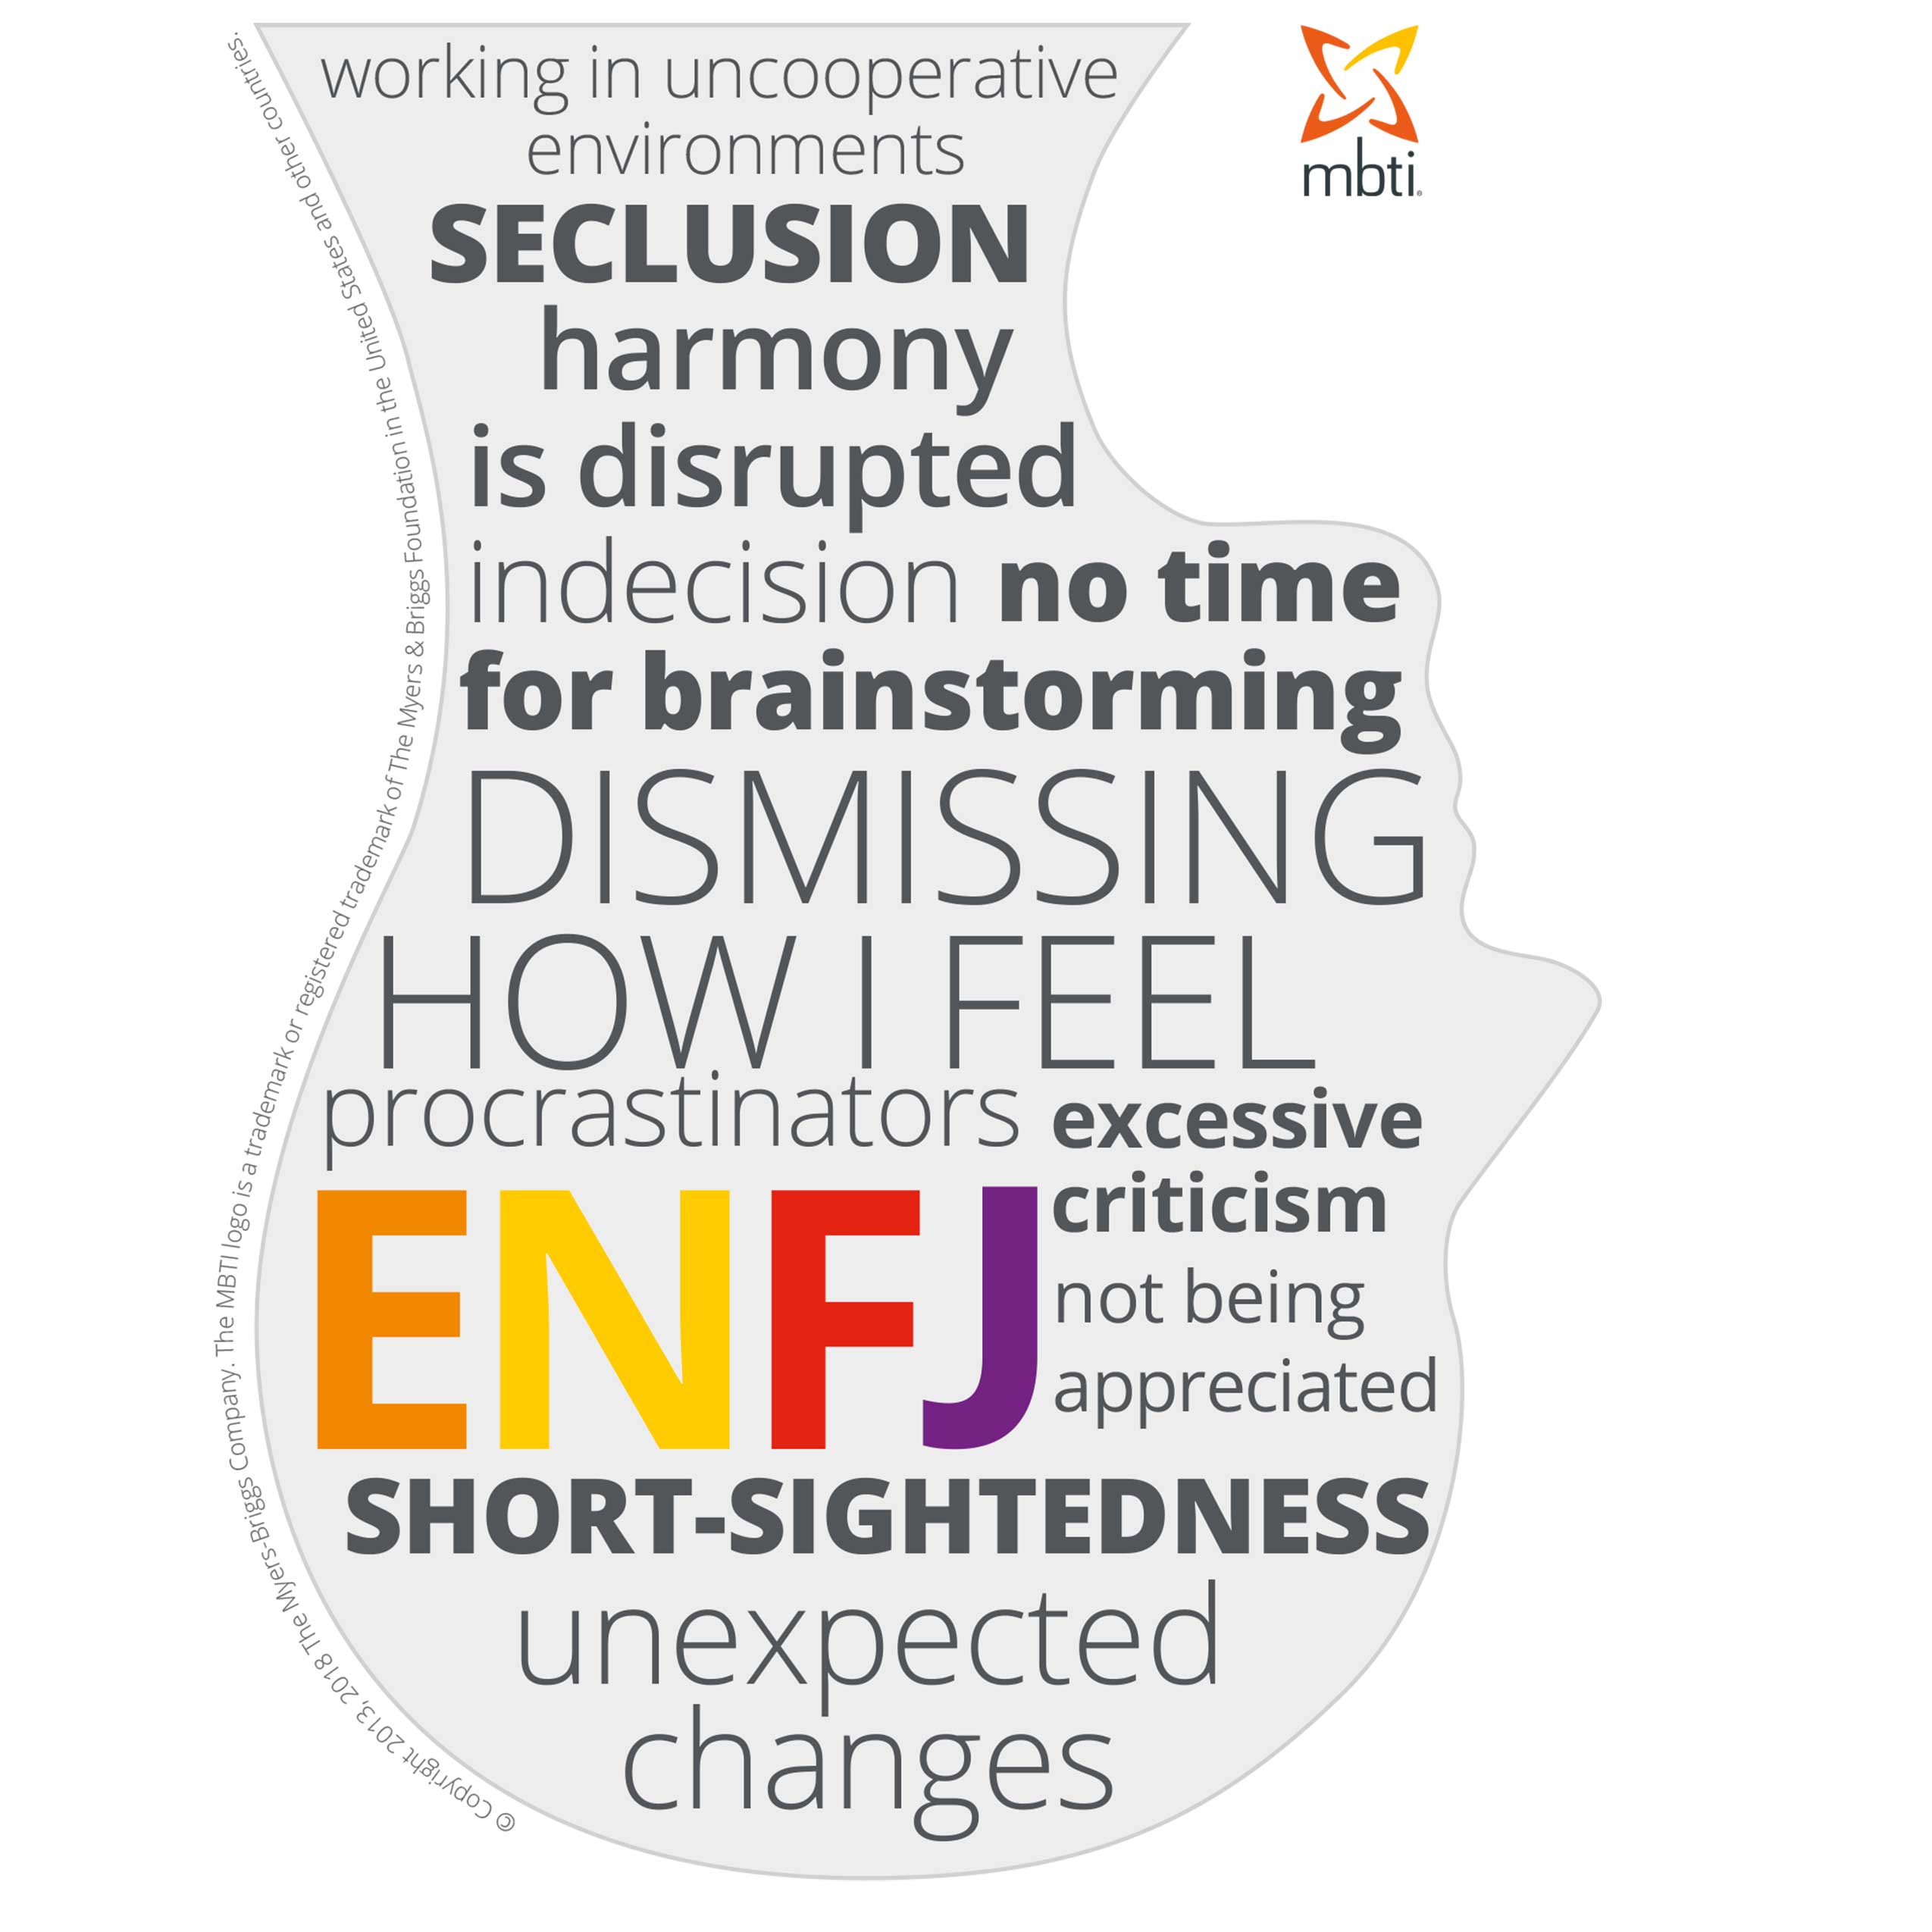 ENFJ stressors